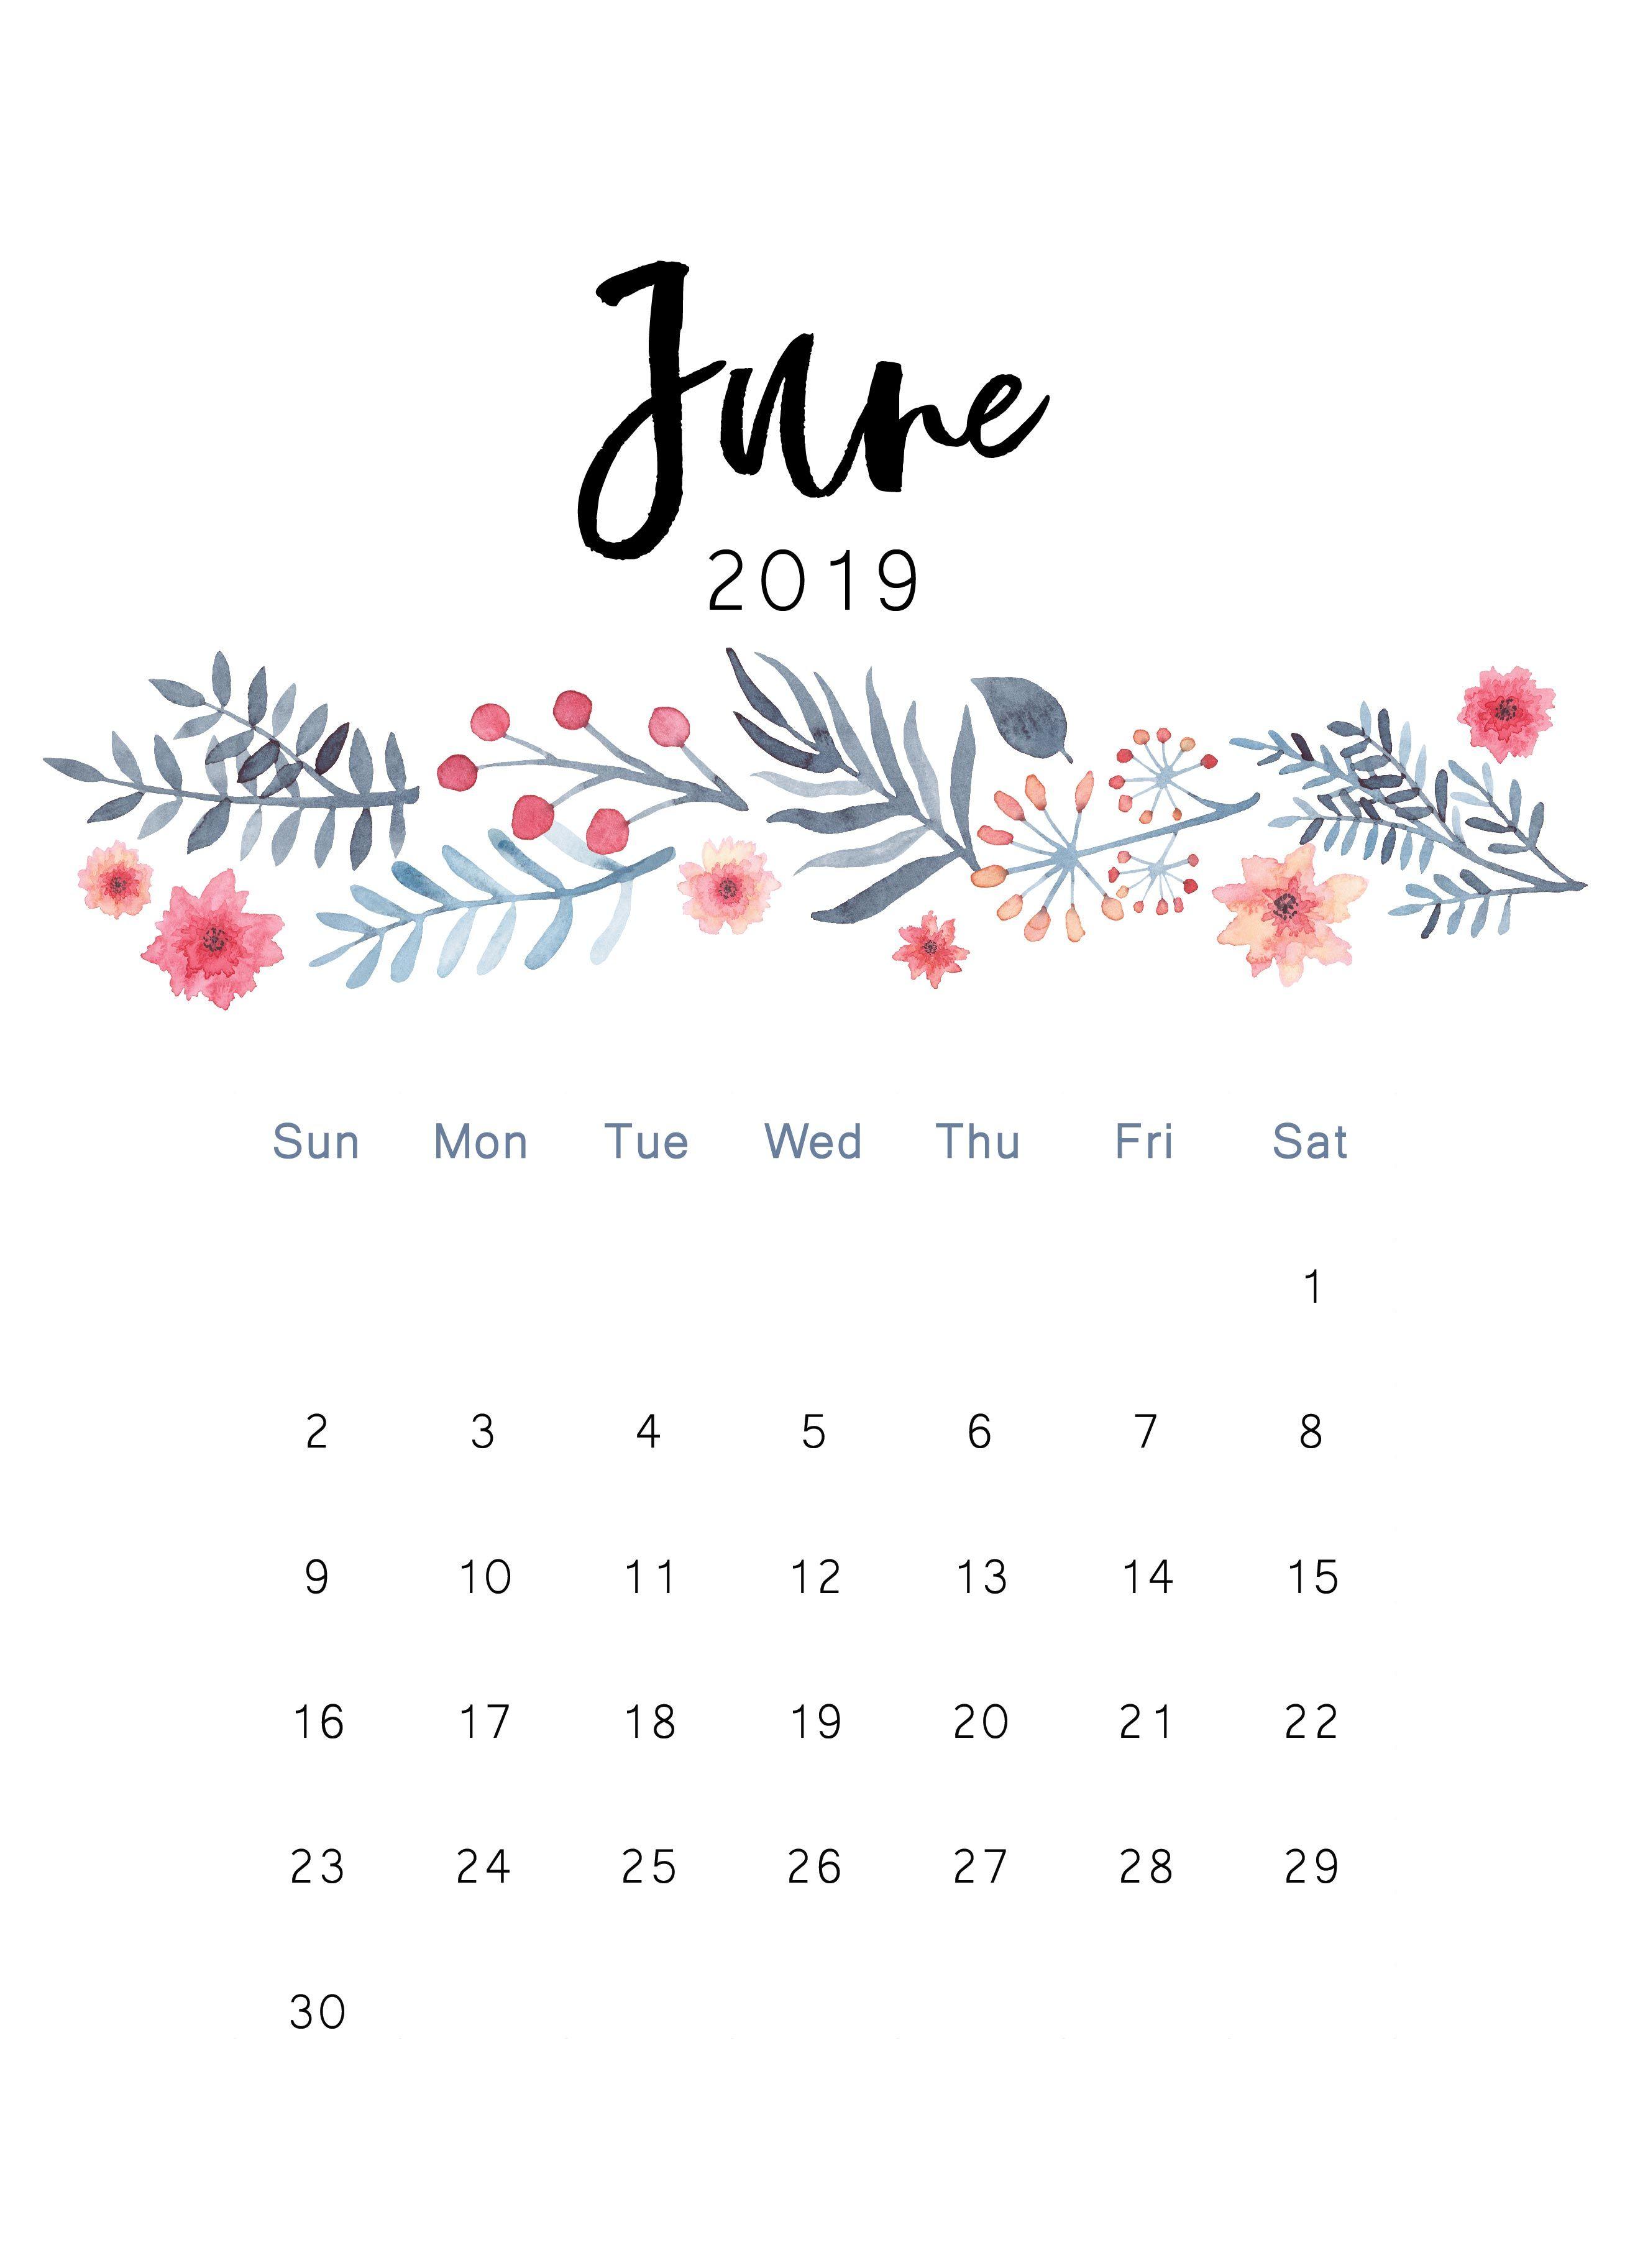 June 2019 Calendar Wallpapers Wallpaper Cave